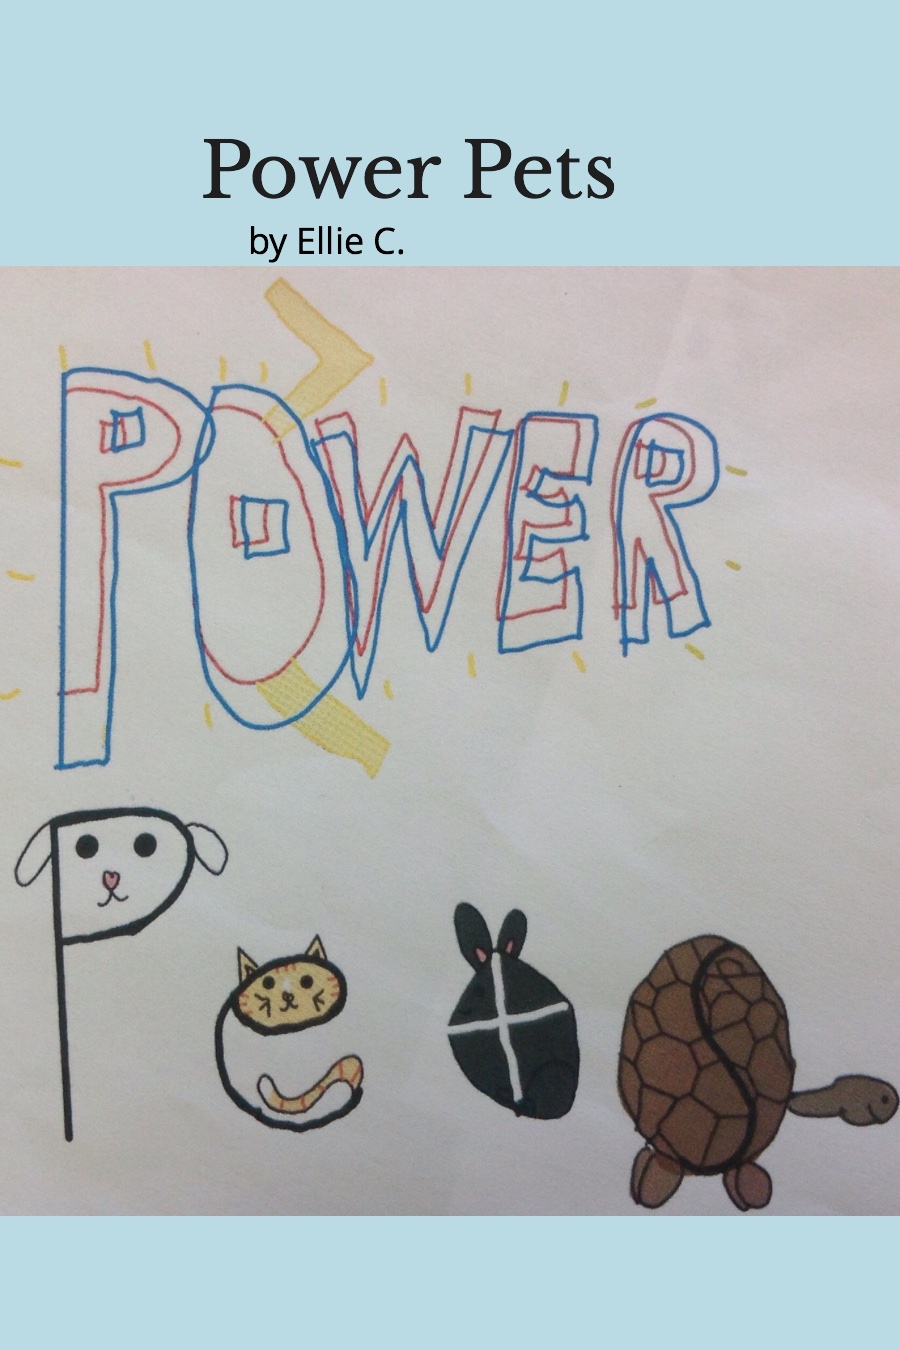 Power Pets by Ellie C